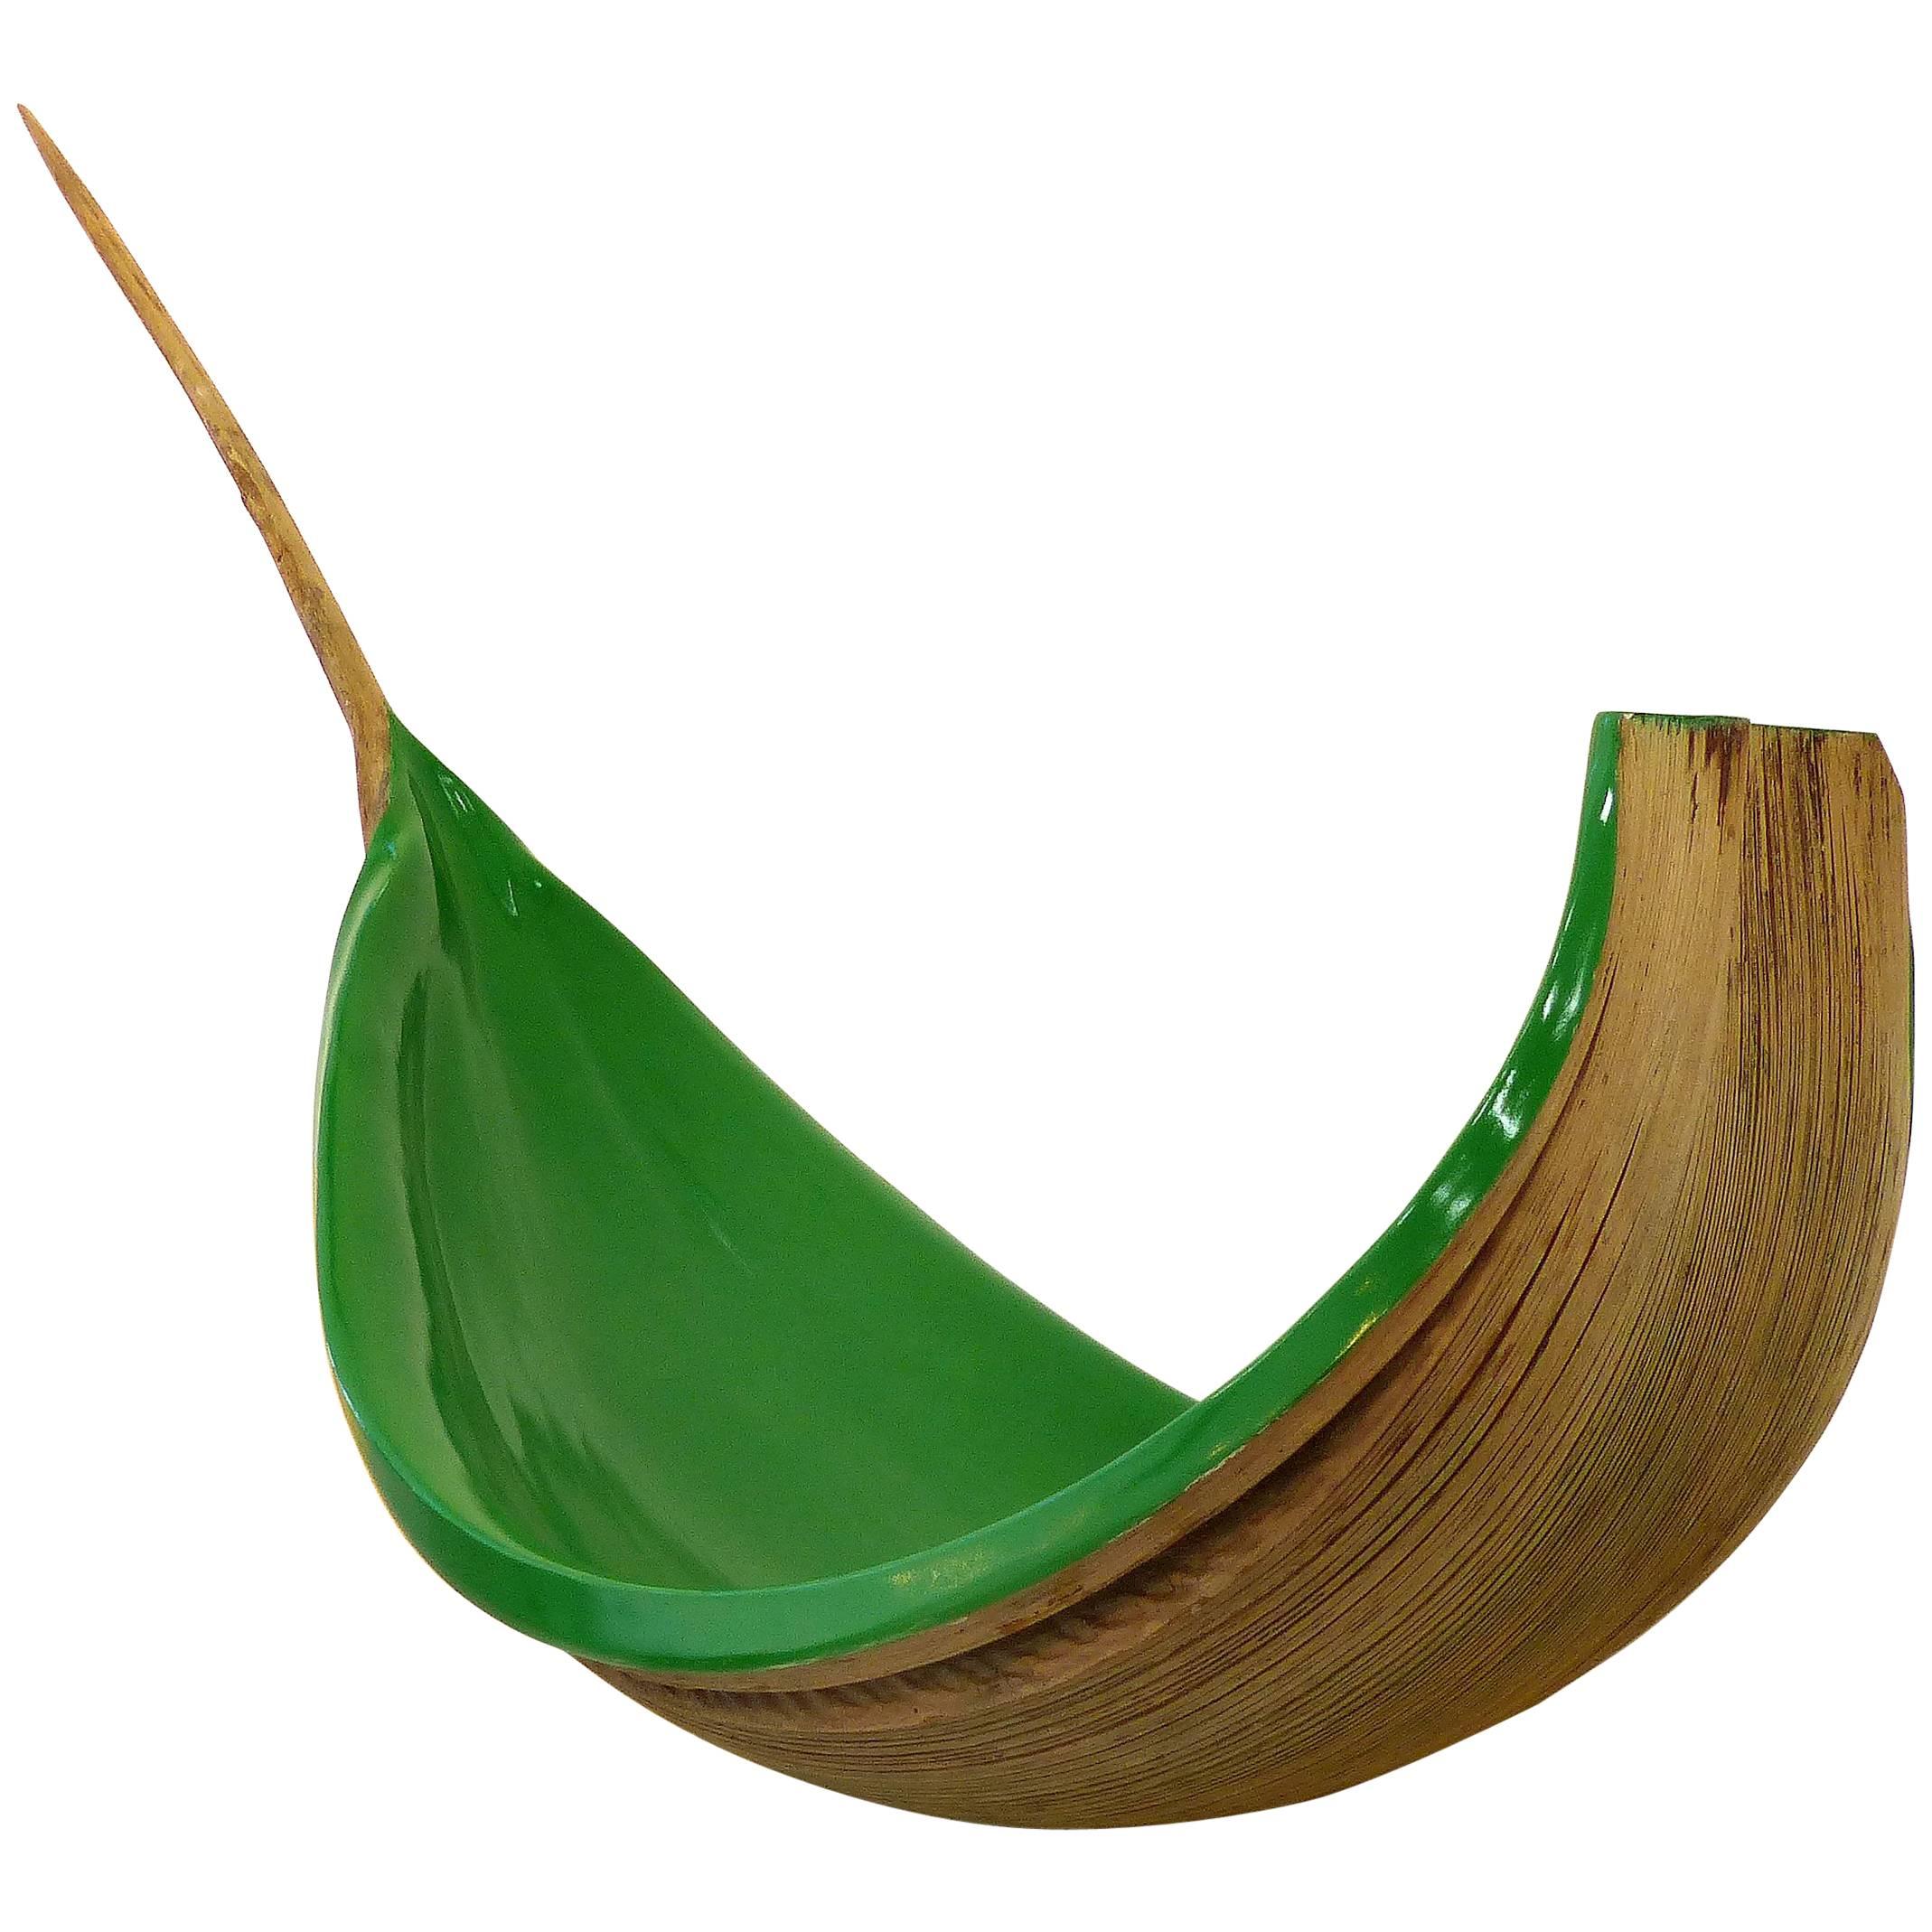 Brazilian Amazon Coconut Palm Frond Sculptural Bowl by Valeria Totti